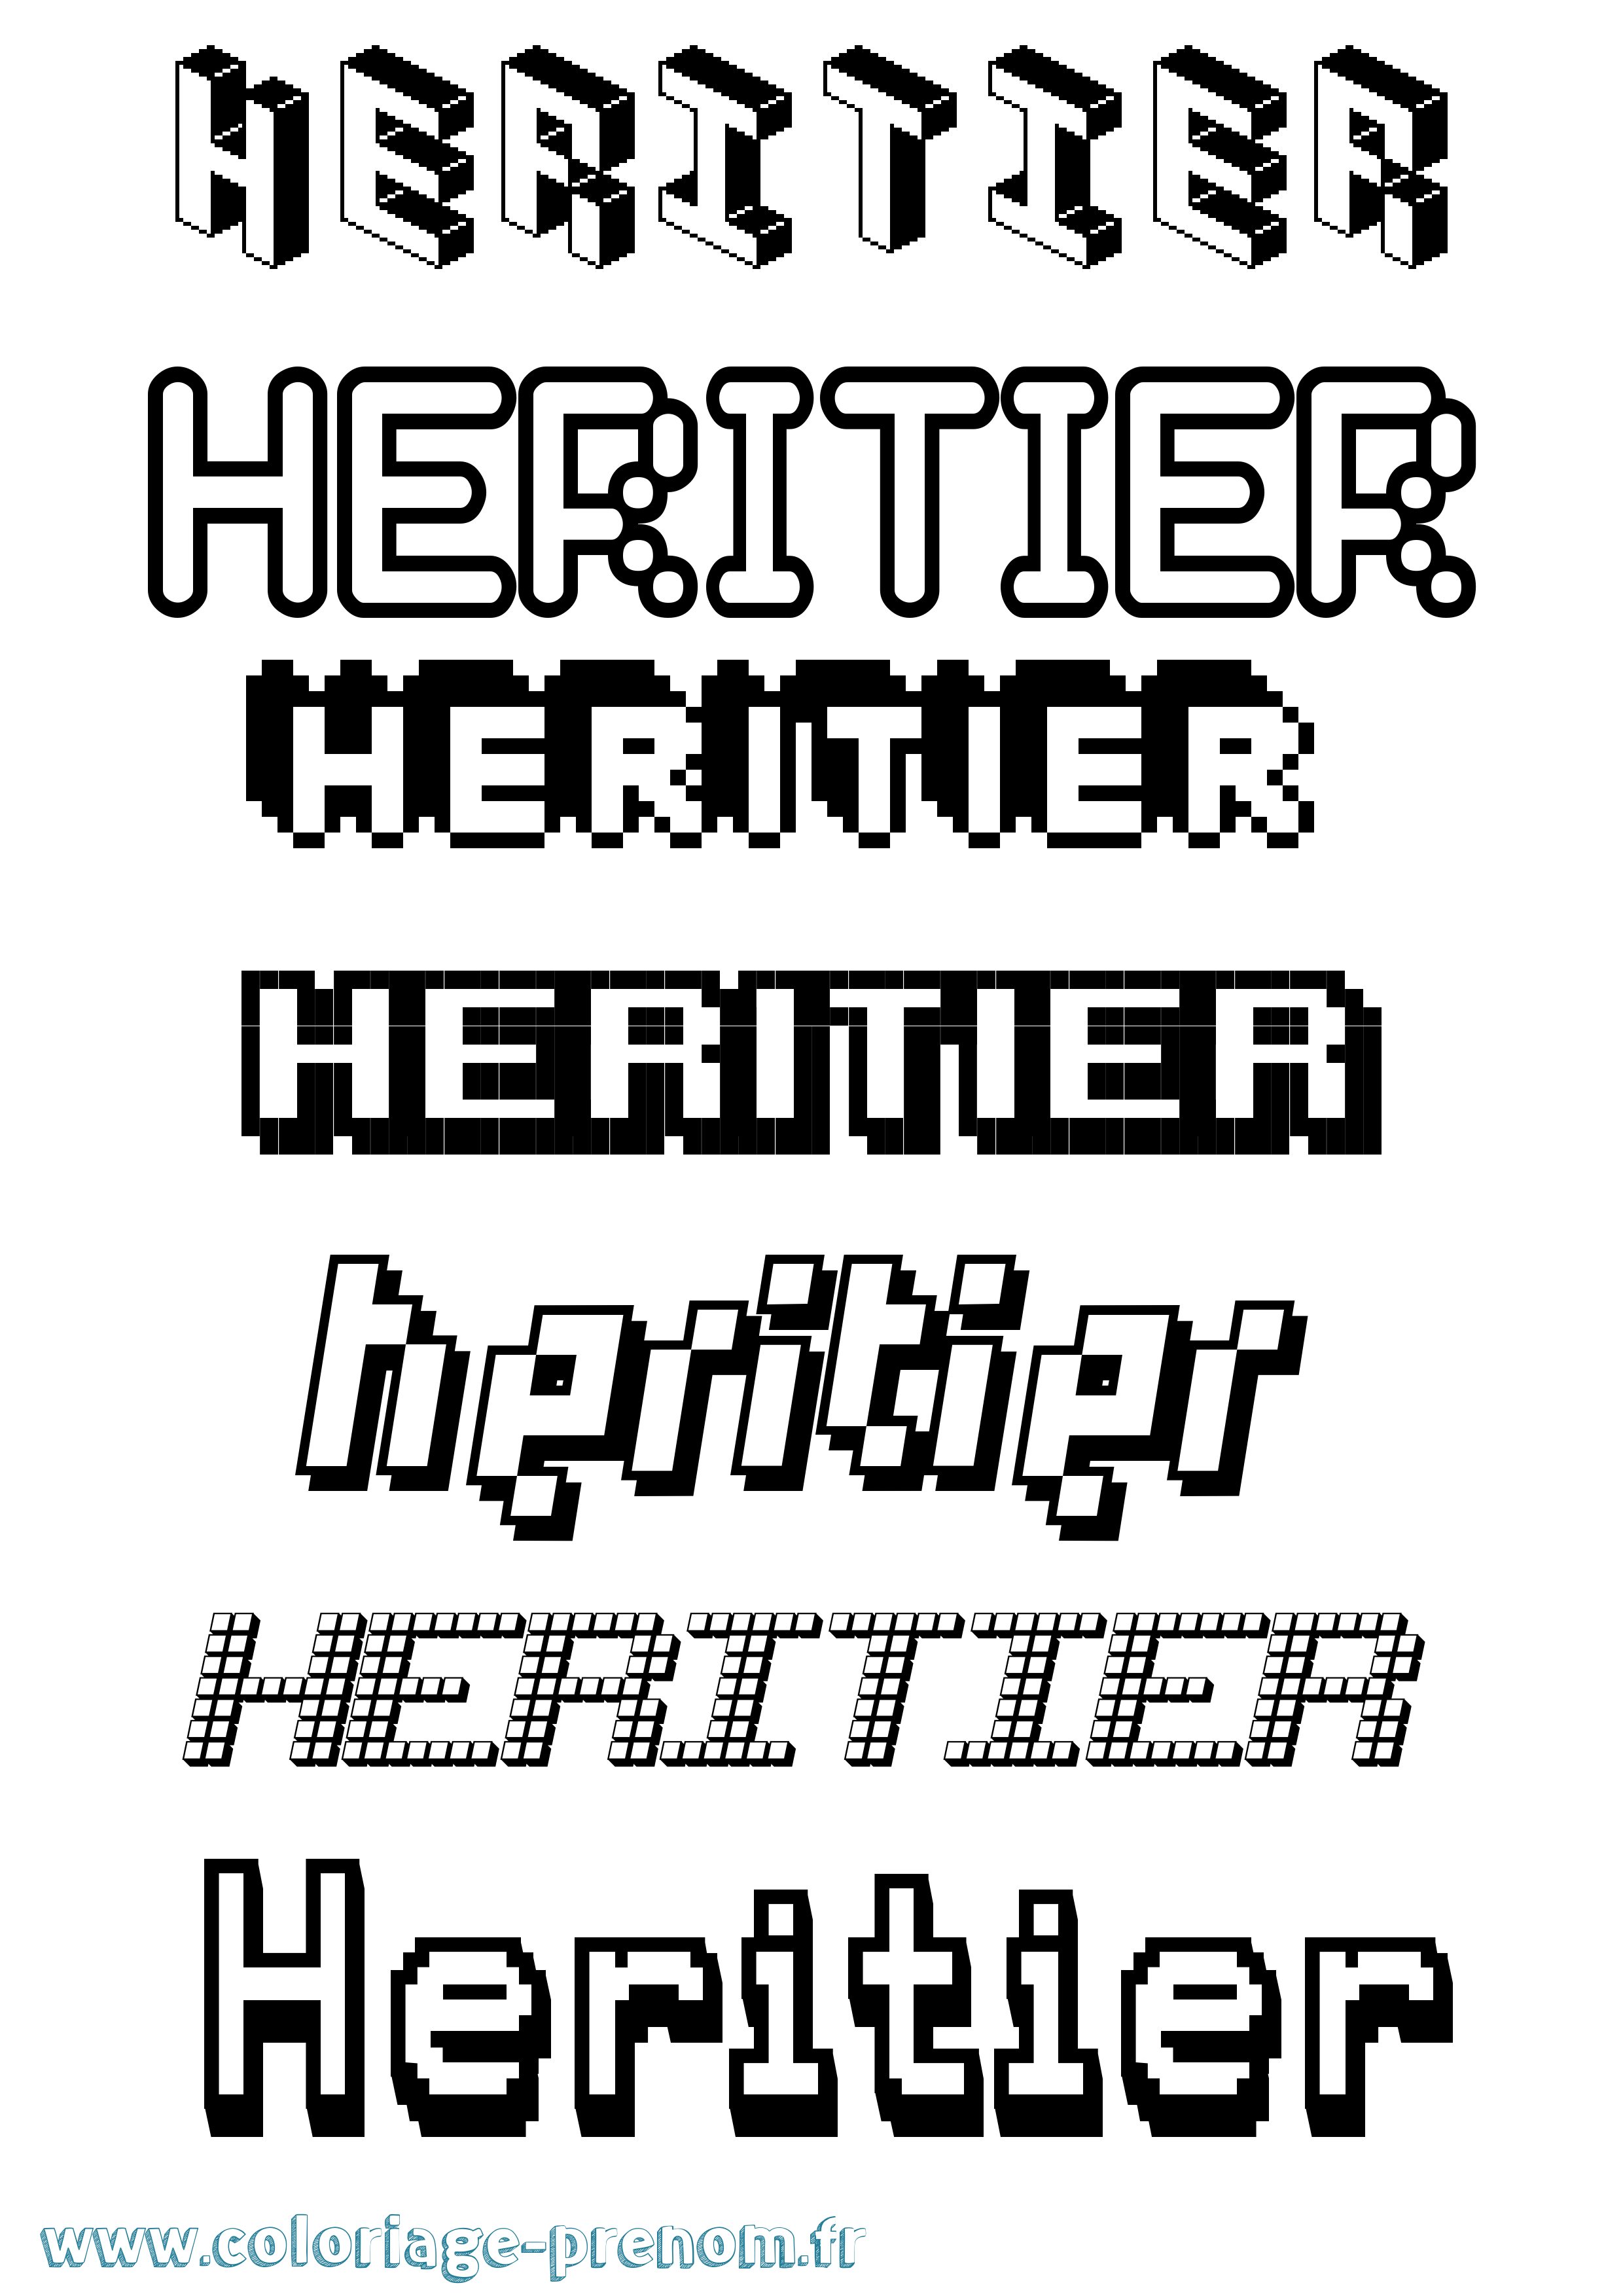 Coloriage prénom Heritier Pixel